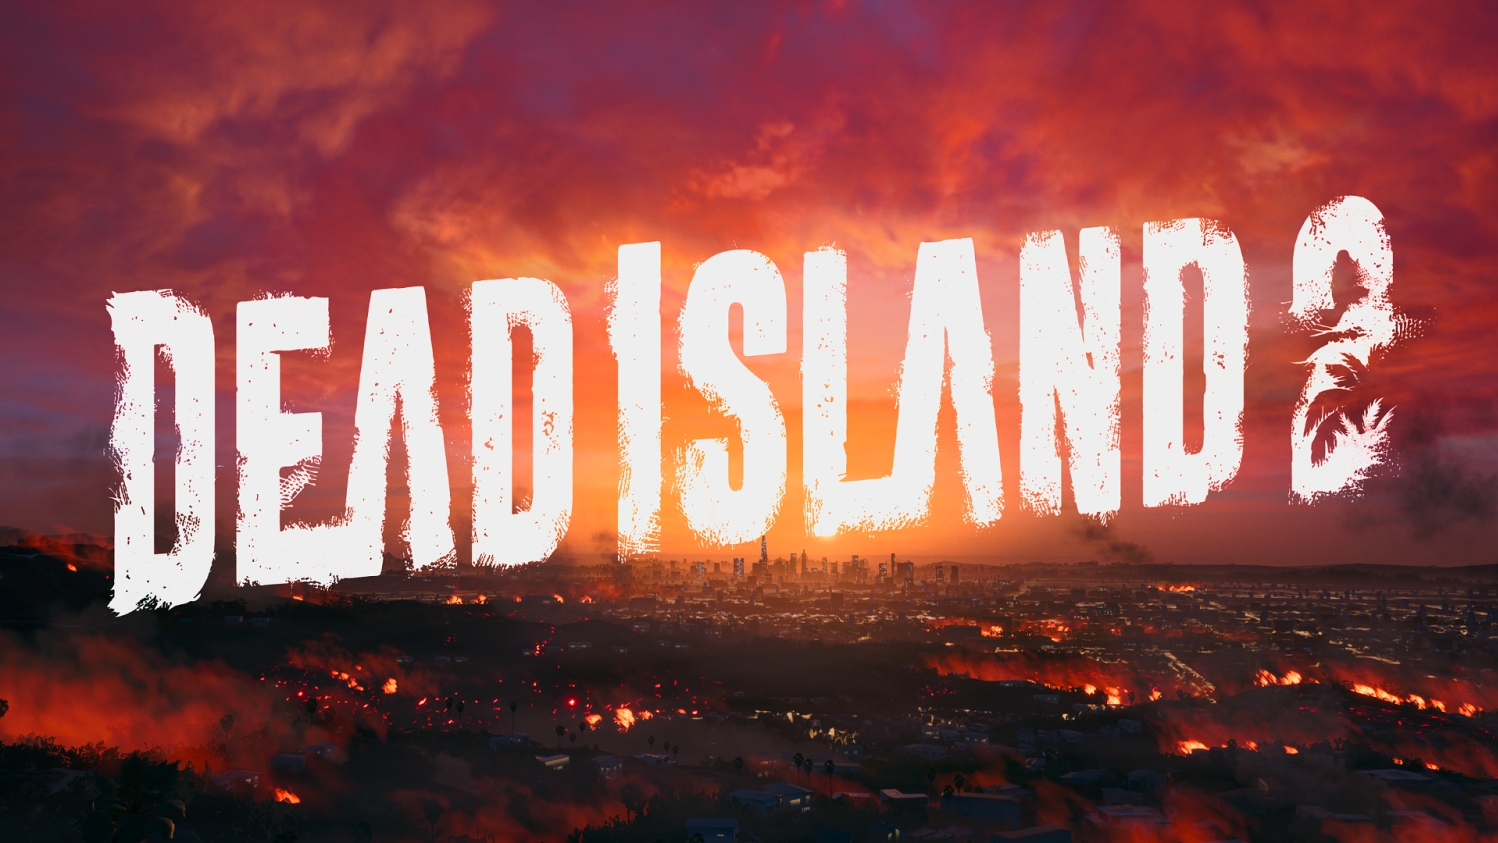  Dead Island 2: Day 1 Edition - PlayStation 4 : Plaion